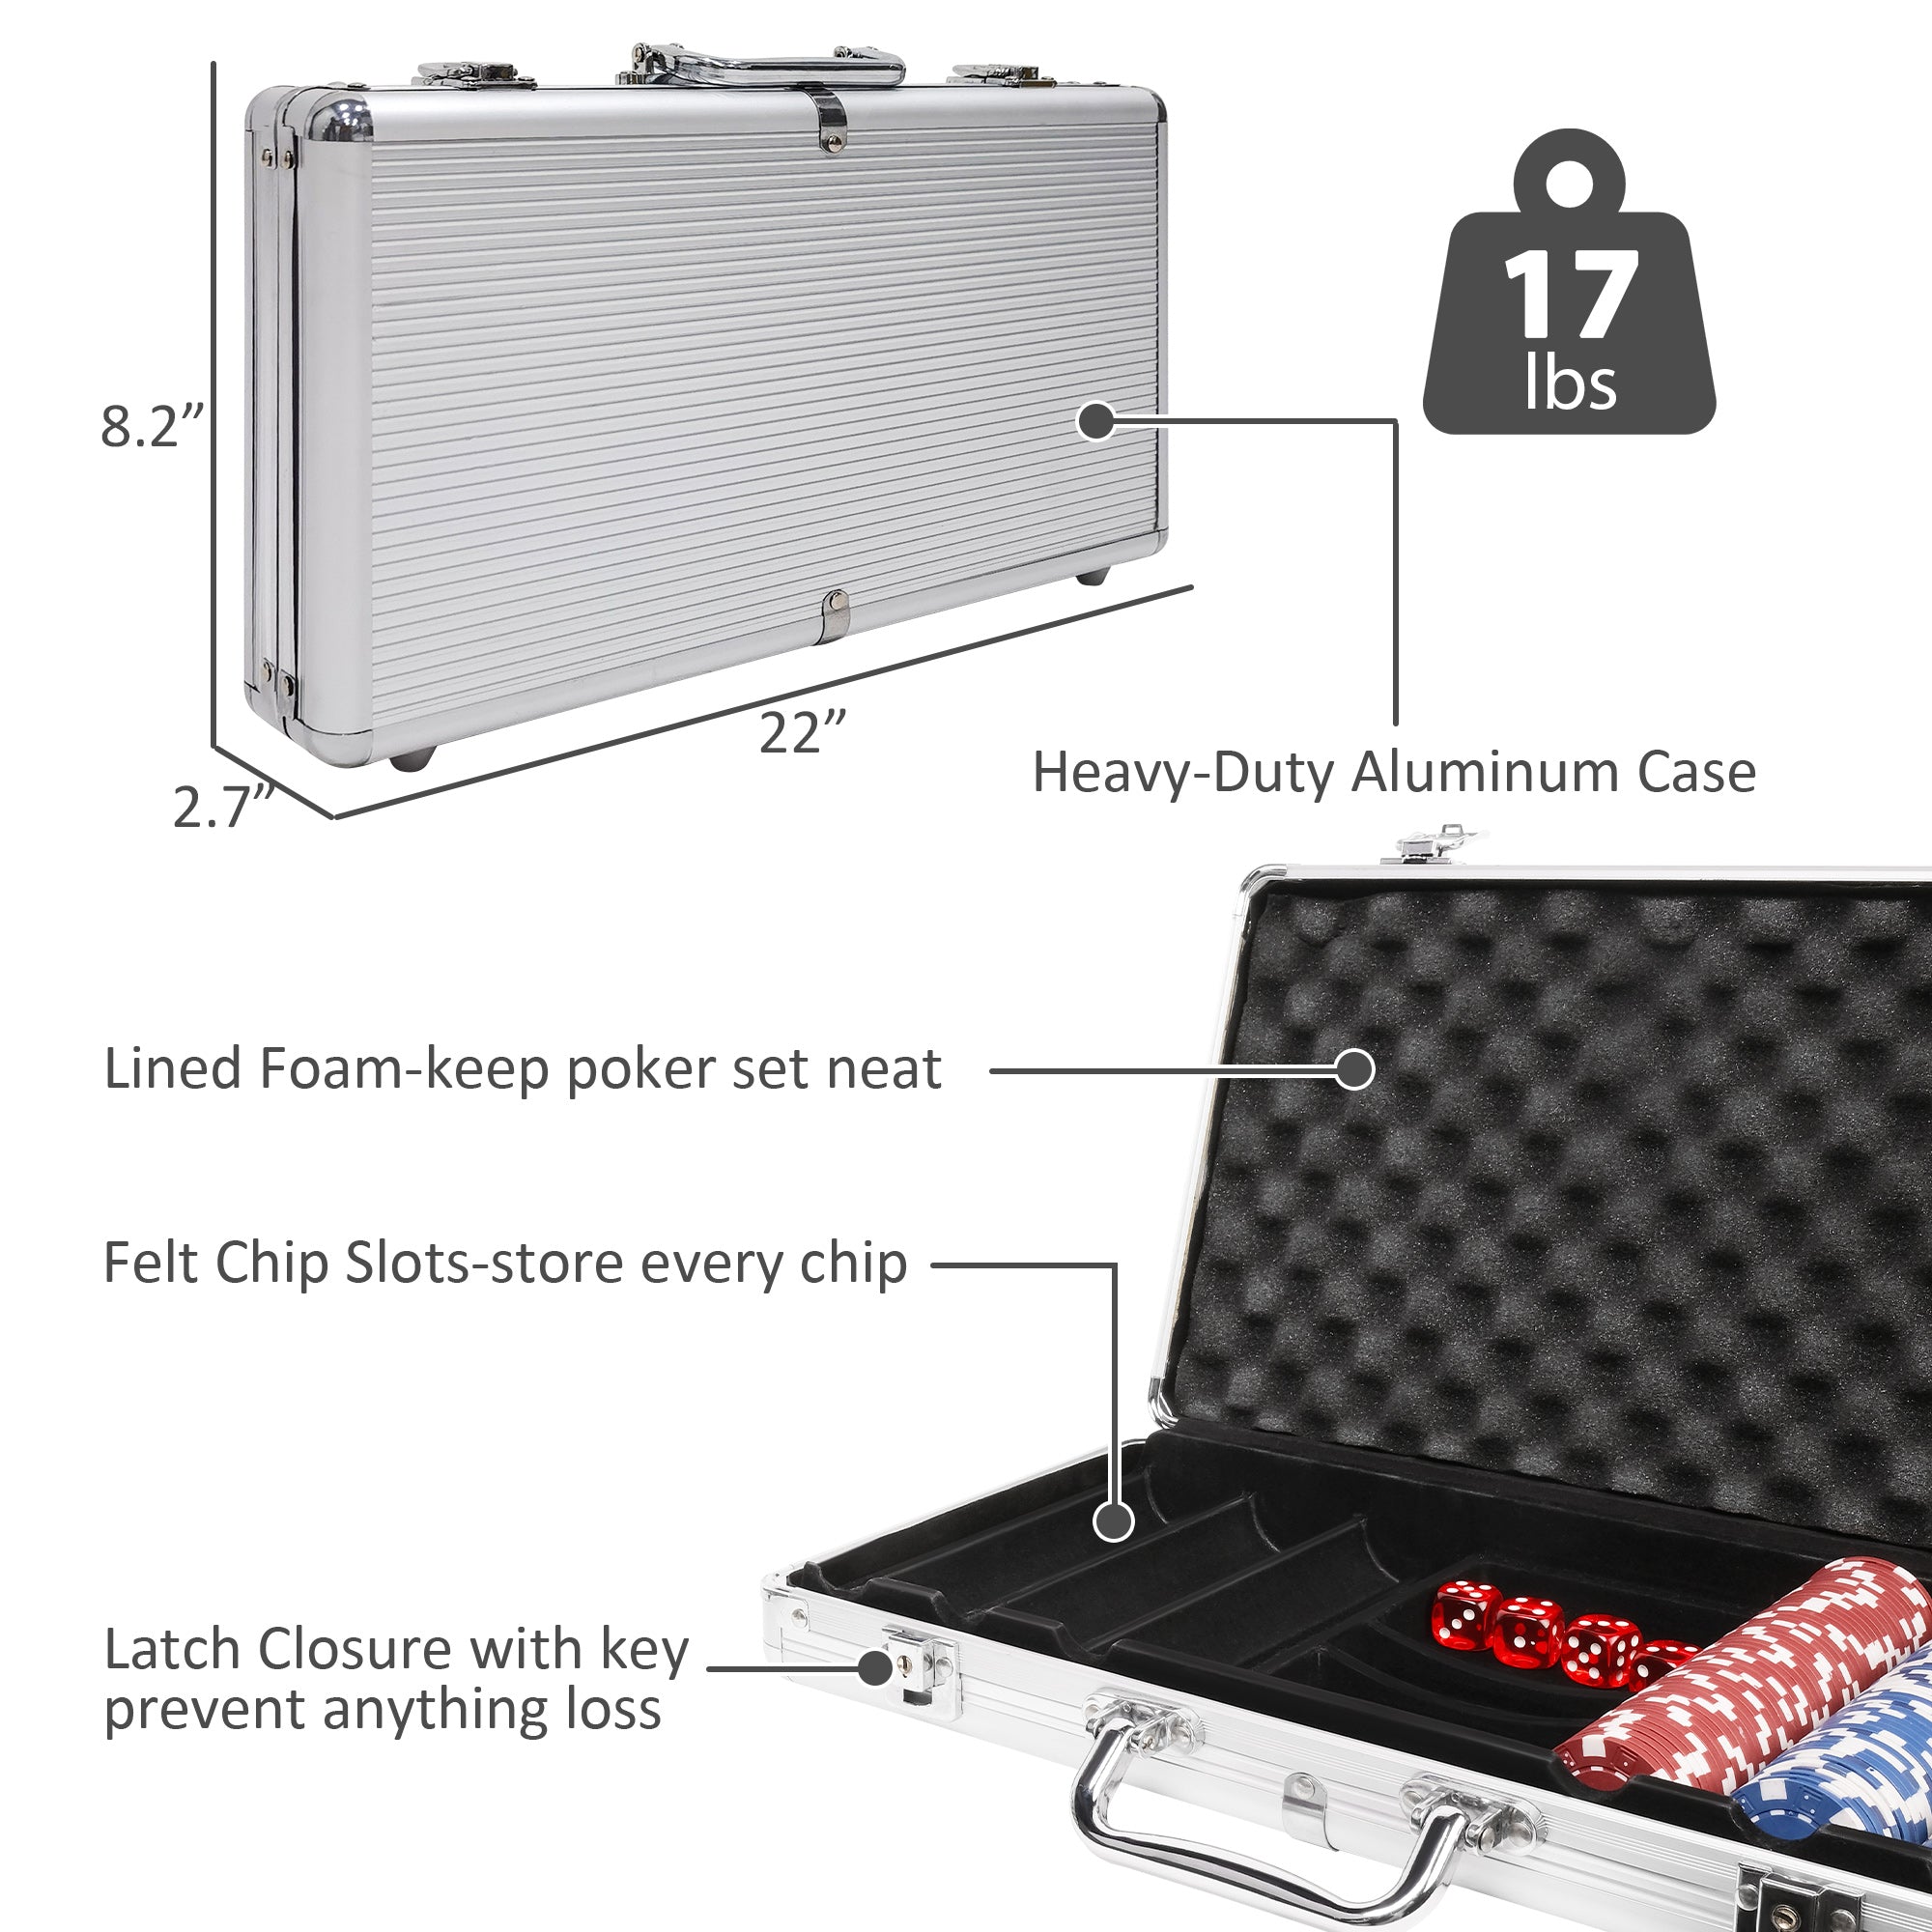 300 Poker Chip Set, 11.5 Gram Poker Set Casino Clay Poker Chips Sets with Case